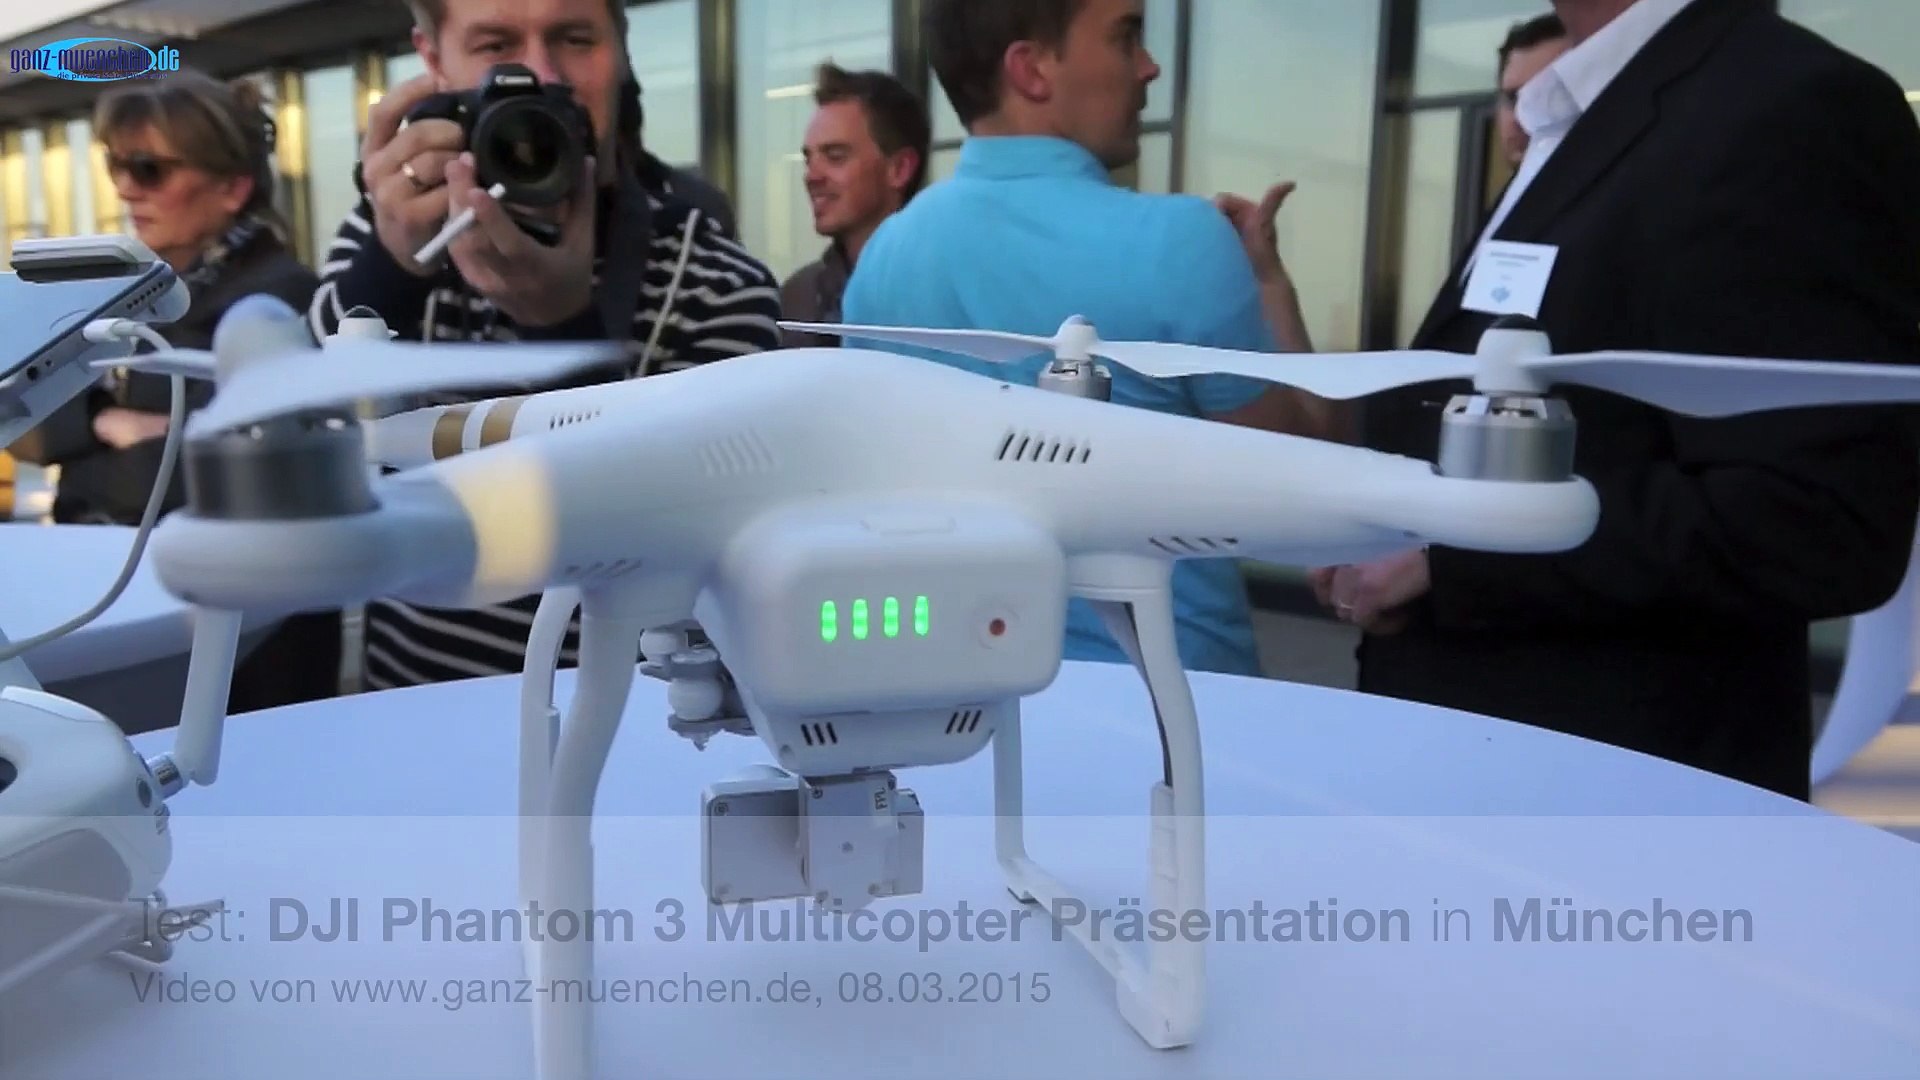 Test: DJI Phantom 3 Multicopter Presentation @ Munich 08.04.2015 - video  Dailymotion